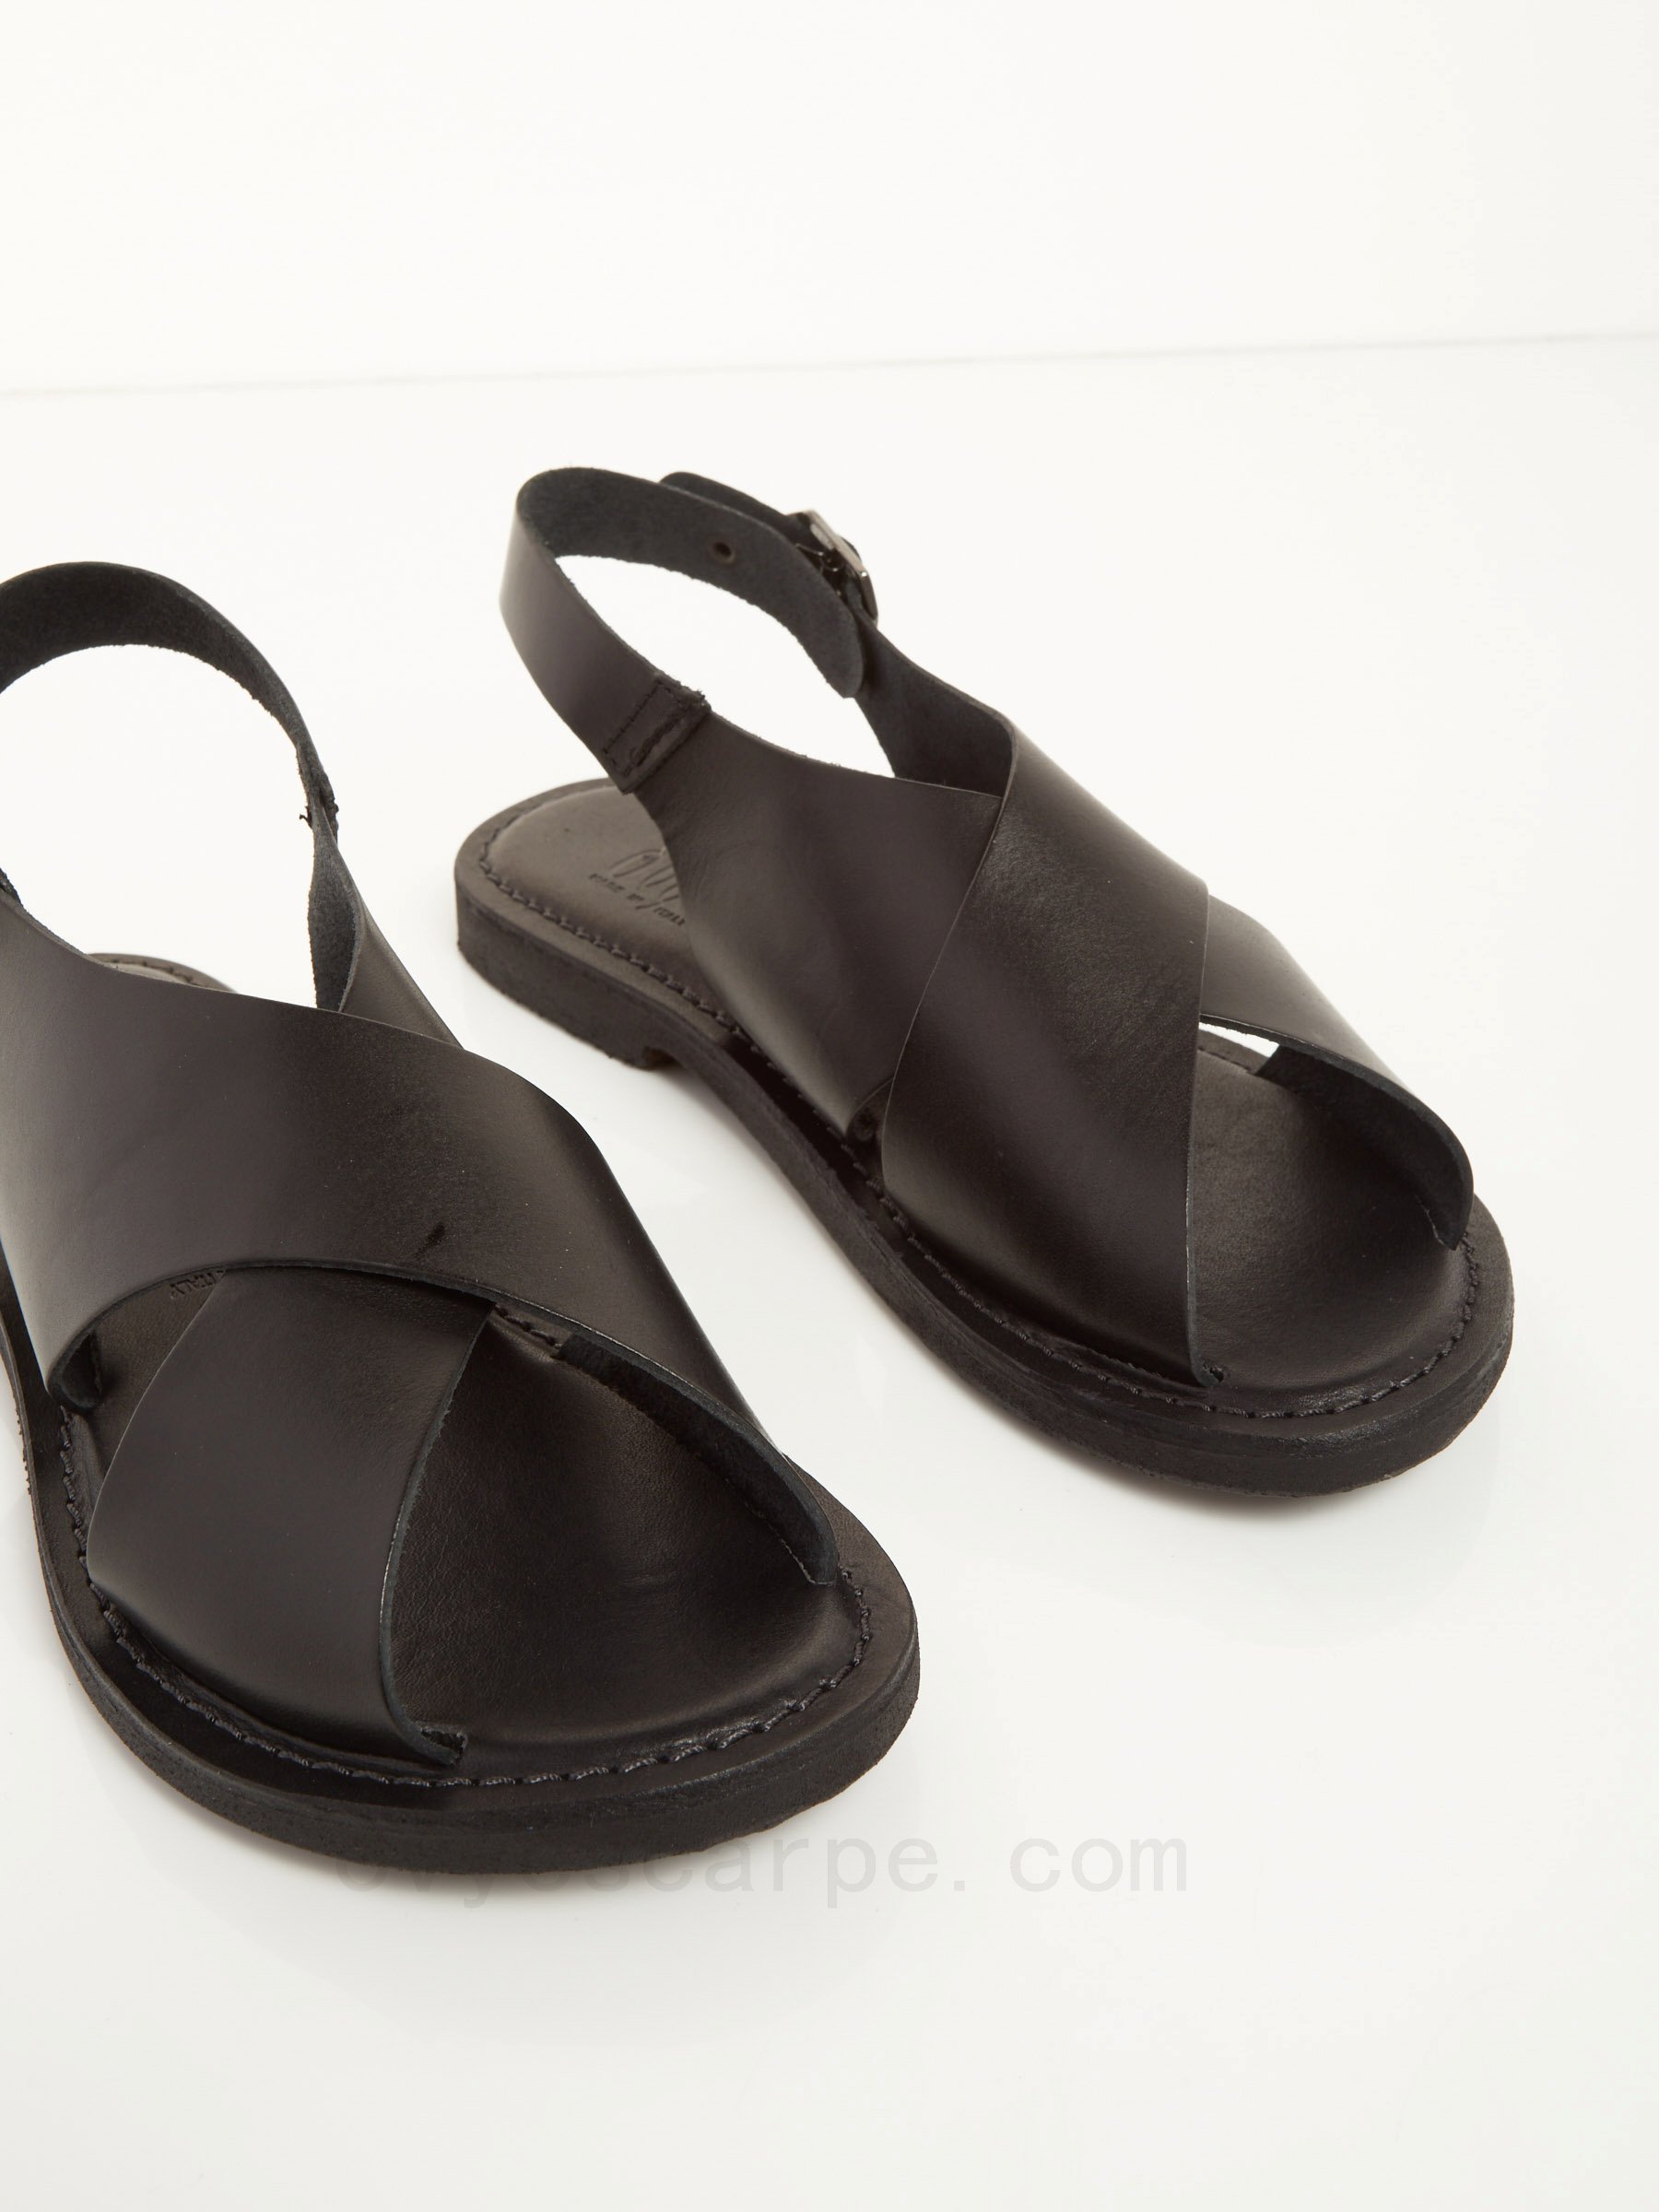 Shop On Line Leather Sandals F08161027-0504 scarpe ovye